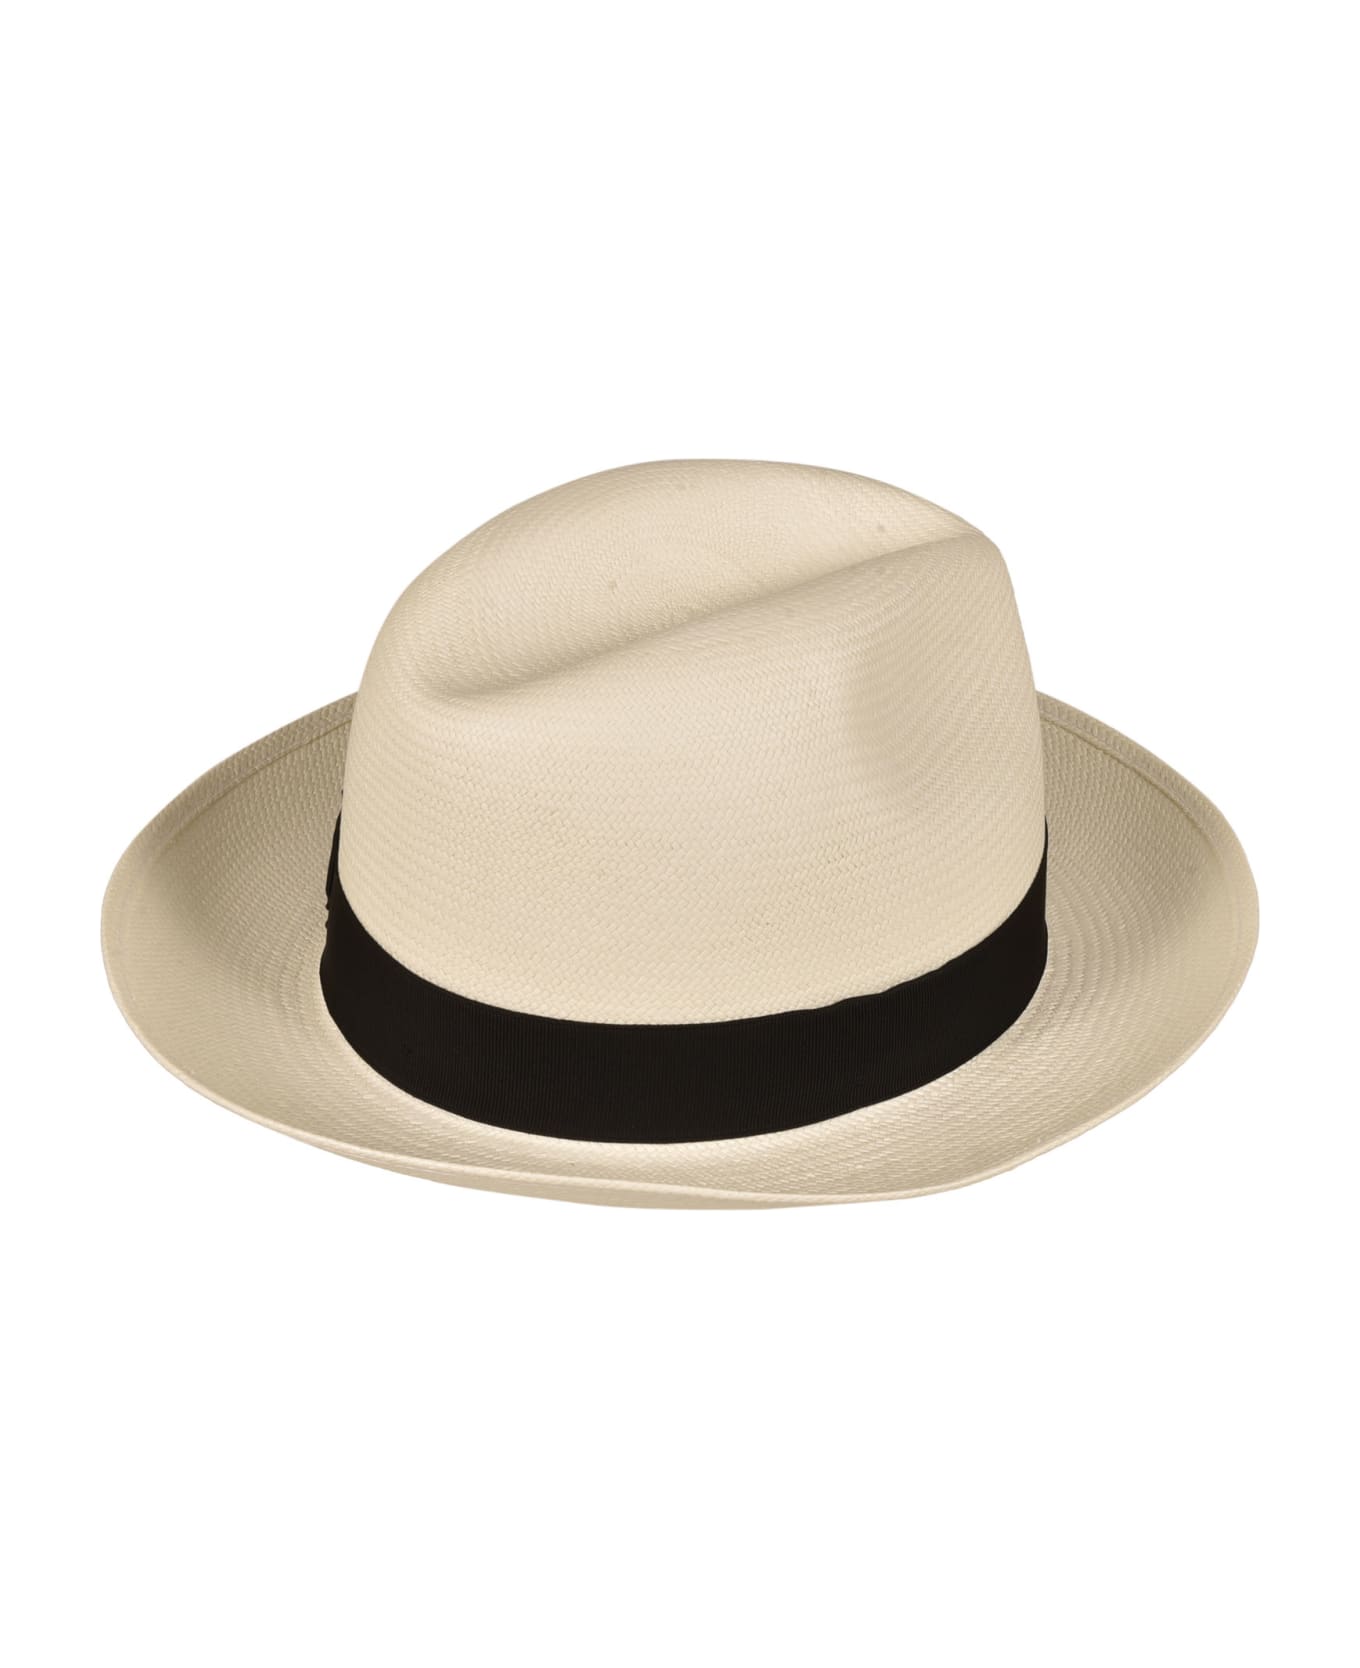 Borsalino Classic Weave Cowboy Hat - White/Black